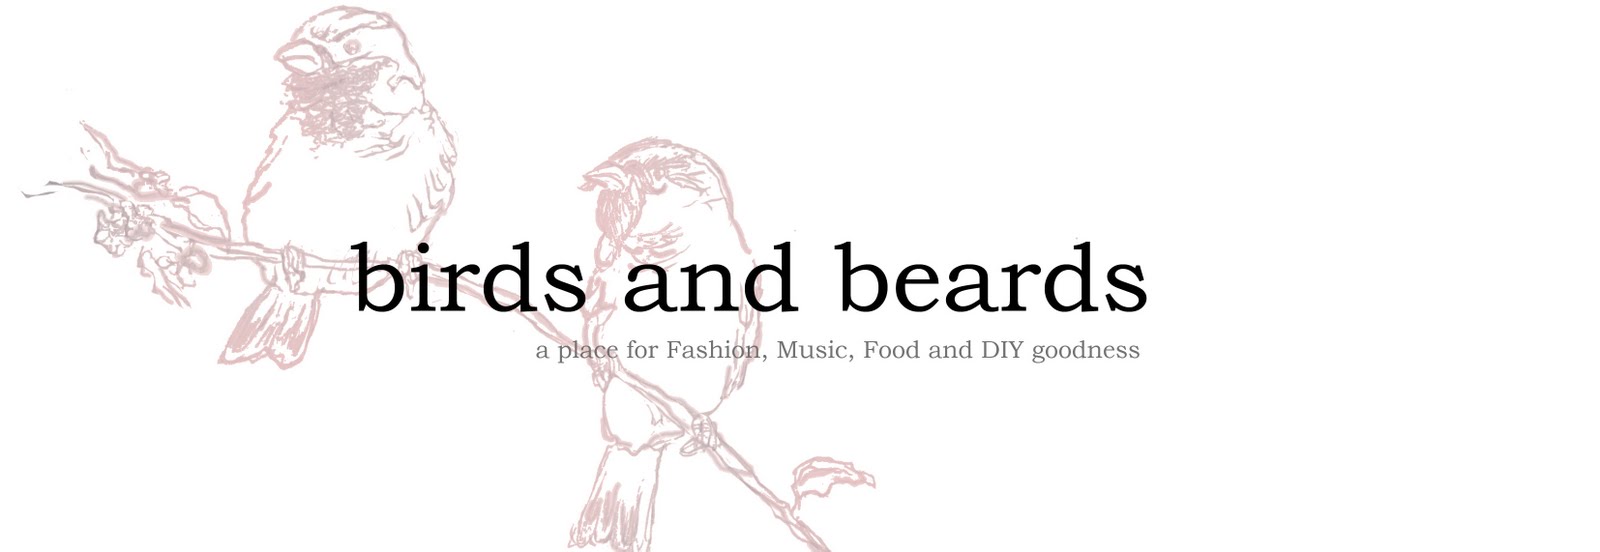 birds and beards